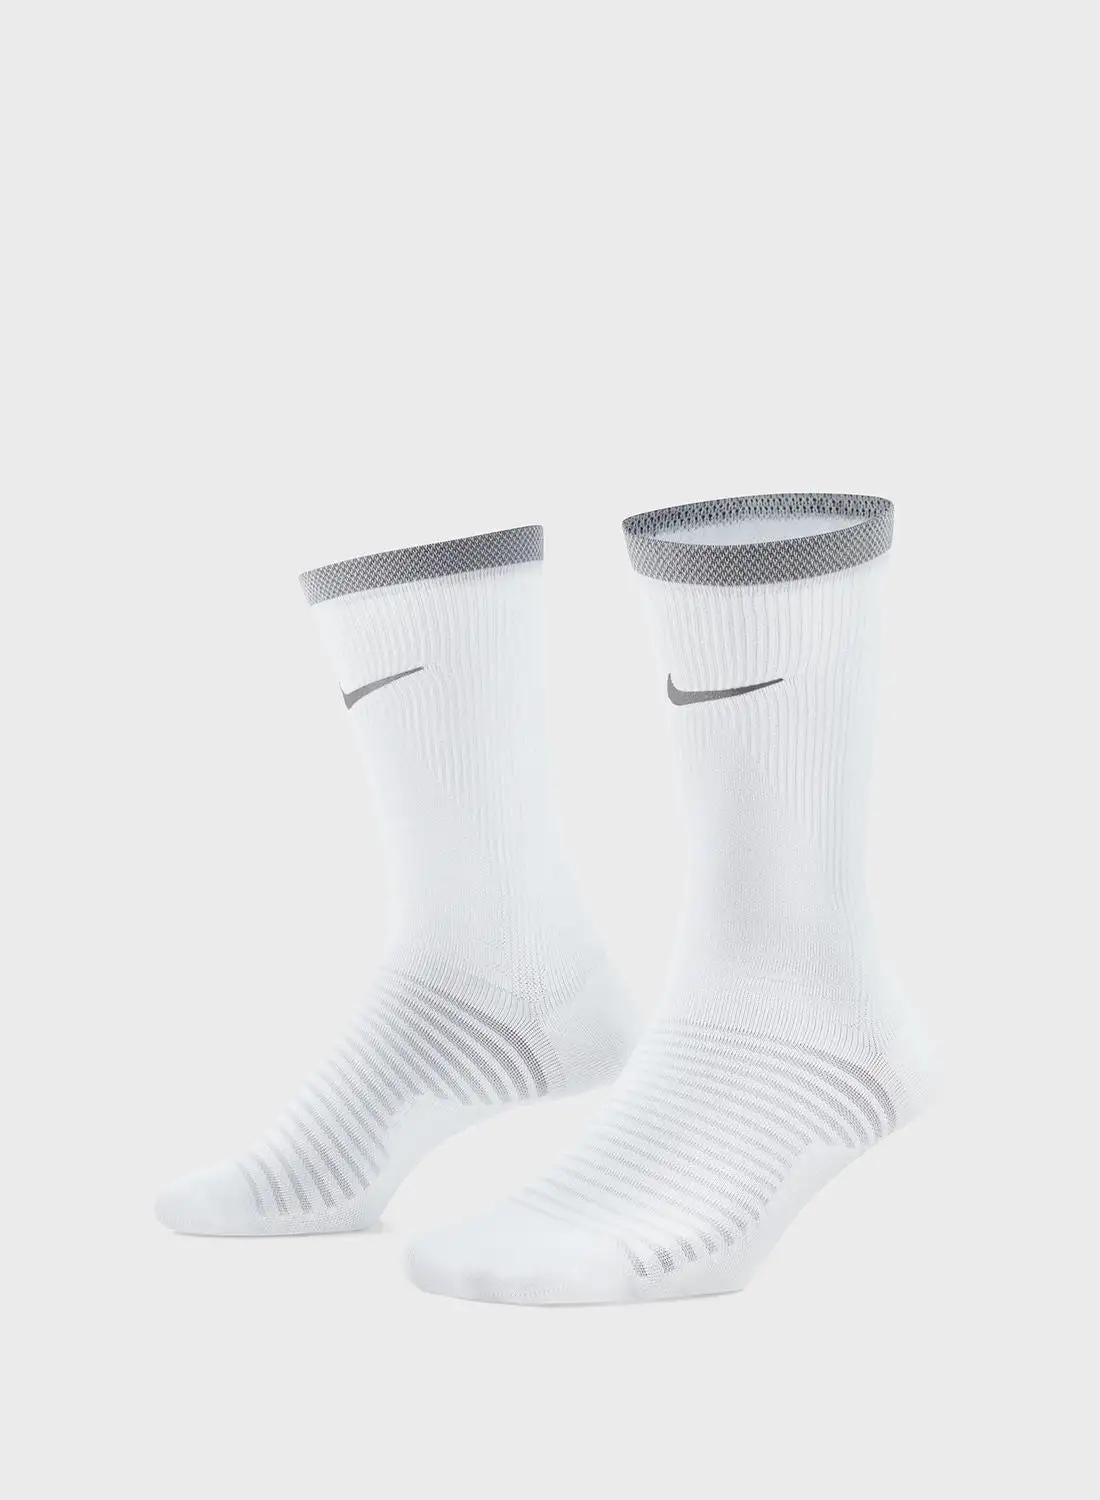 Nike Spark Lightweight Crew200 Socks